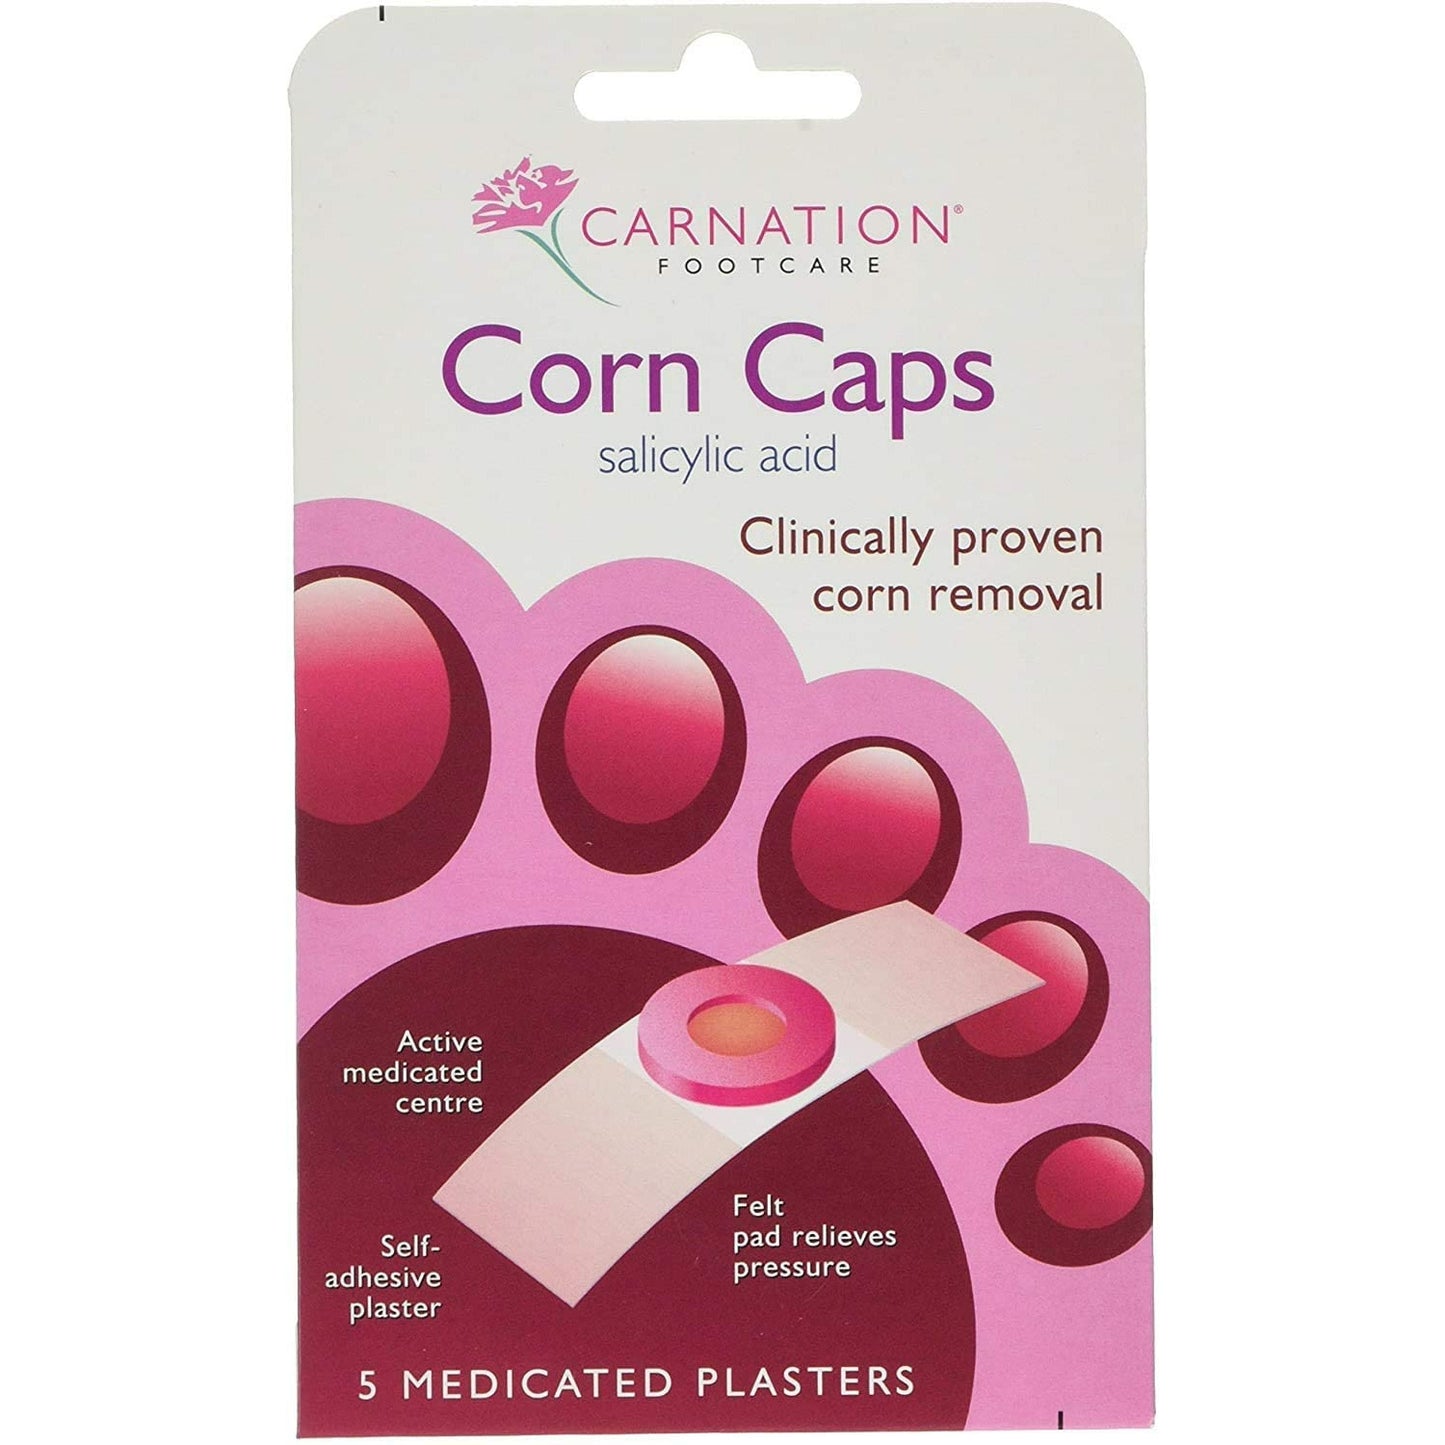 Carnation Corn Cap 5 plasters pack x 2